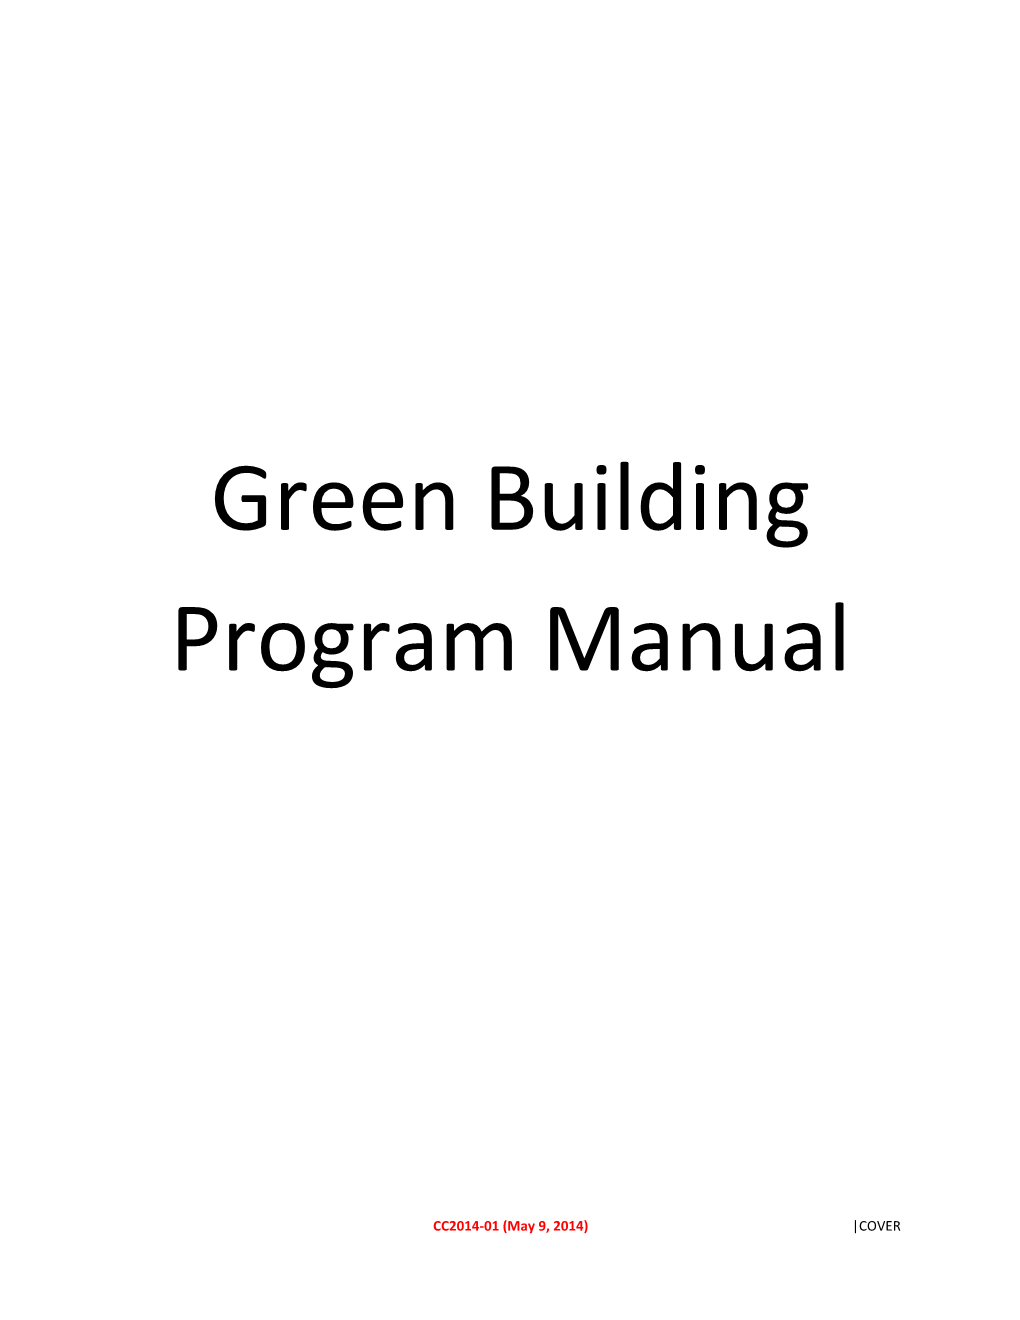 Green Building Program Manual